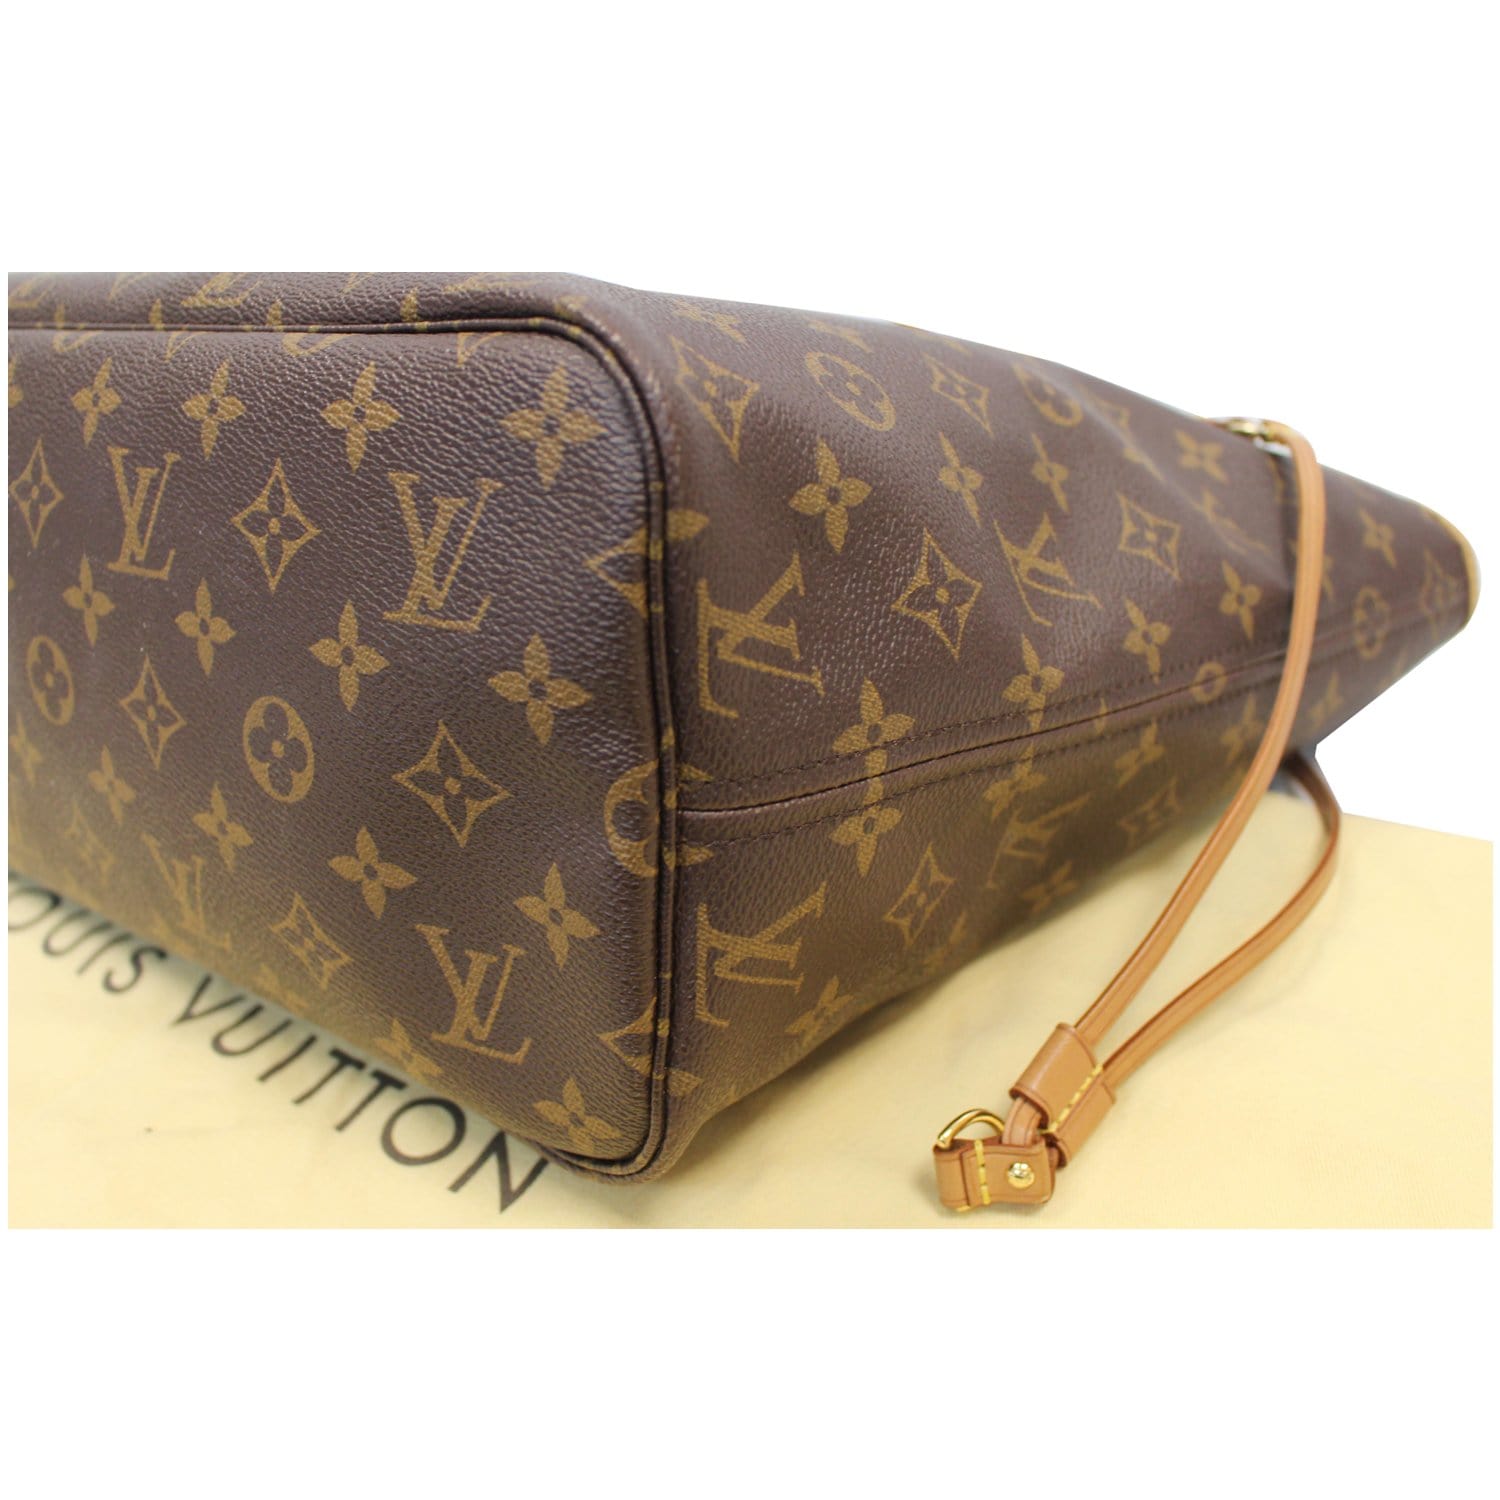 Louis Vuitton Monogram Neverfull MM - Brown Totes, Handbags